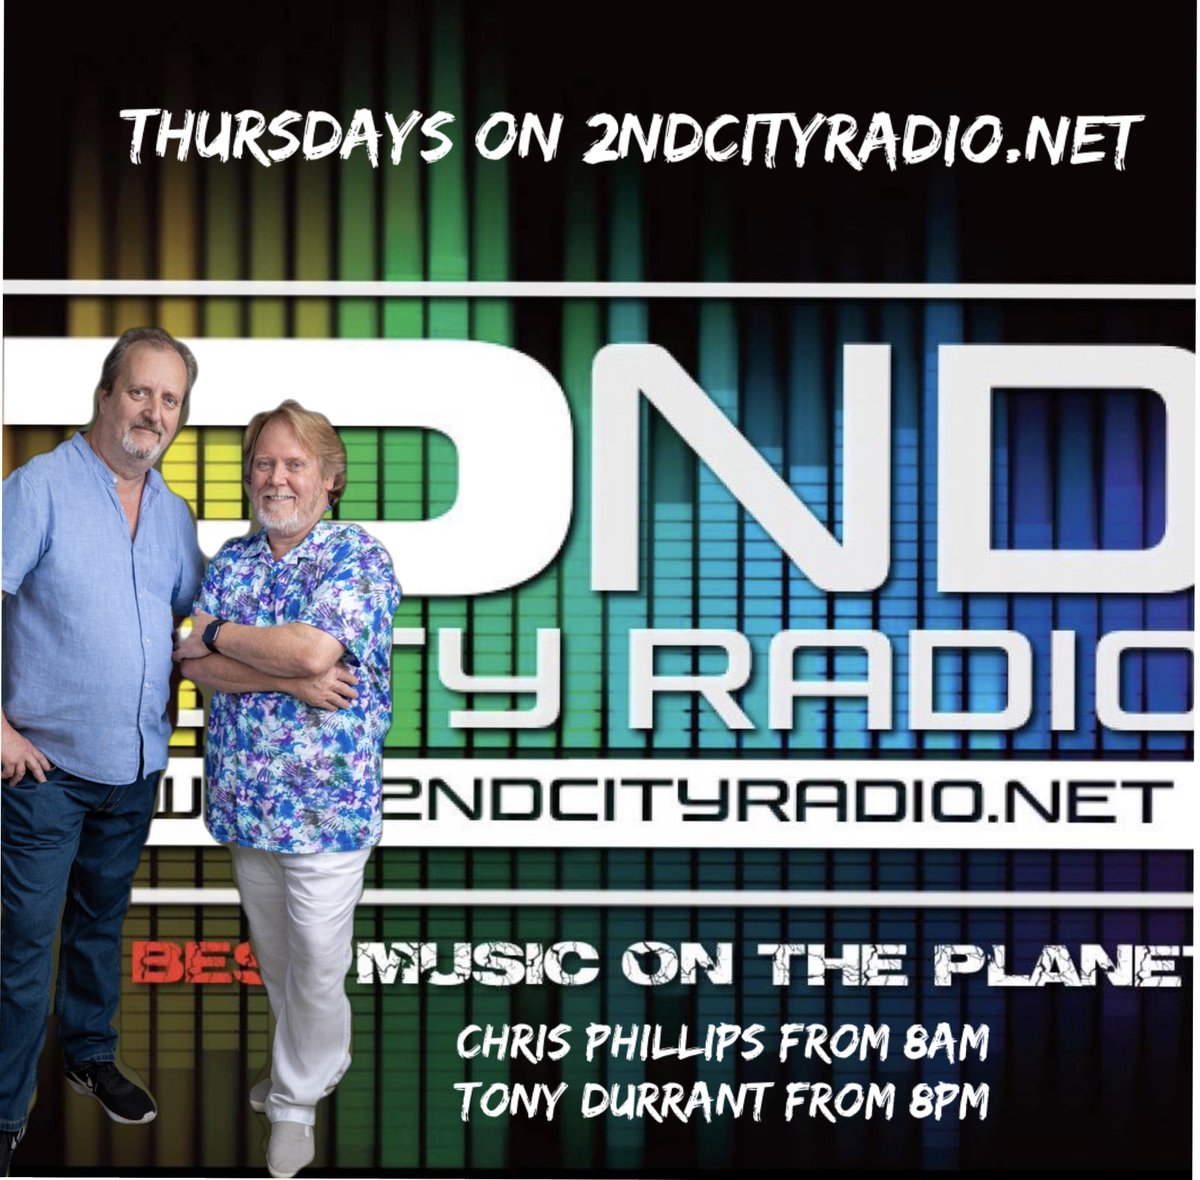 Live with Tony Durrant on 2ndcityradio.net @thefreds @djdurrant @mandyeap @theatreluvvie @holisticentre1 @kittiekat09